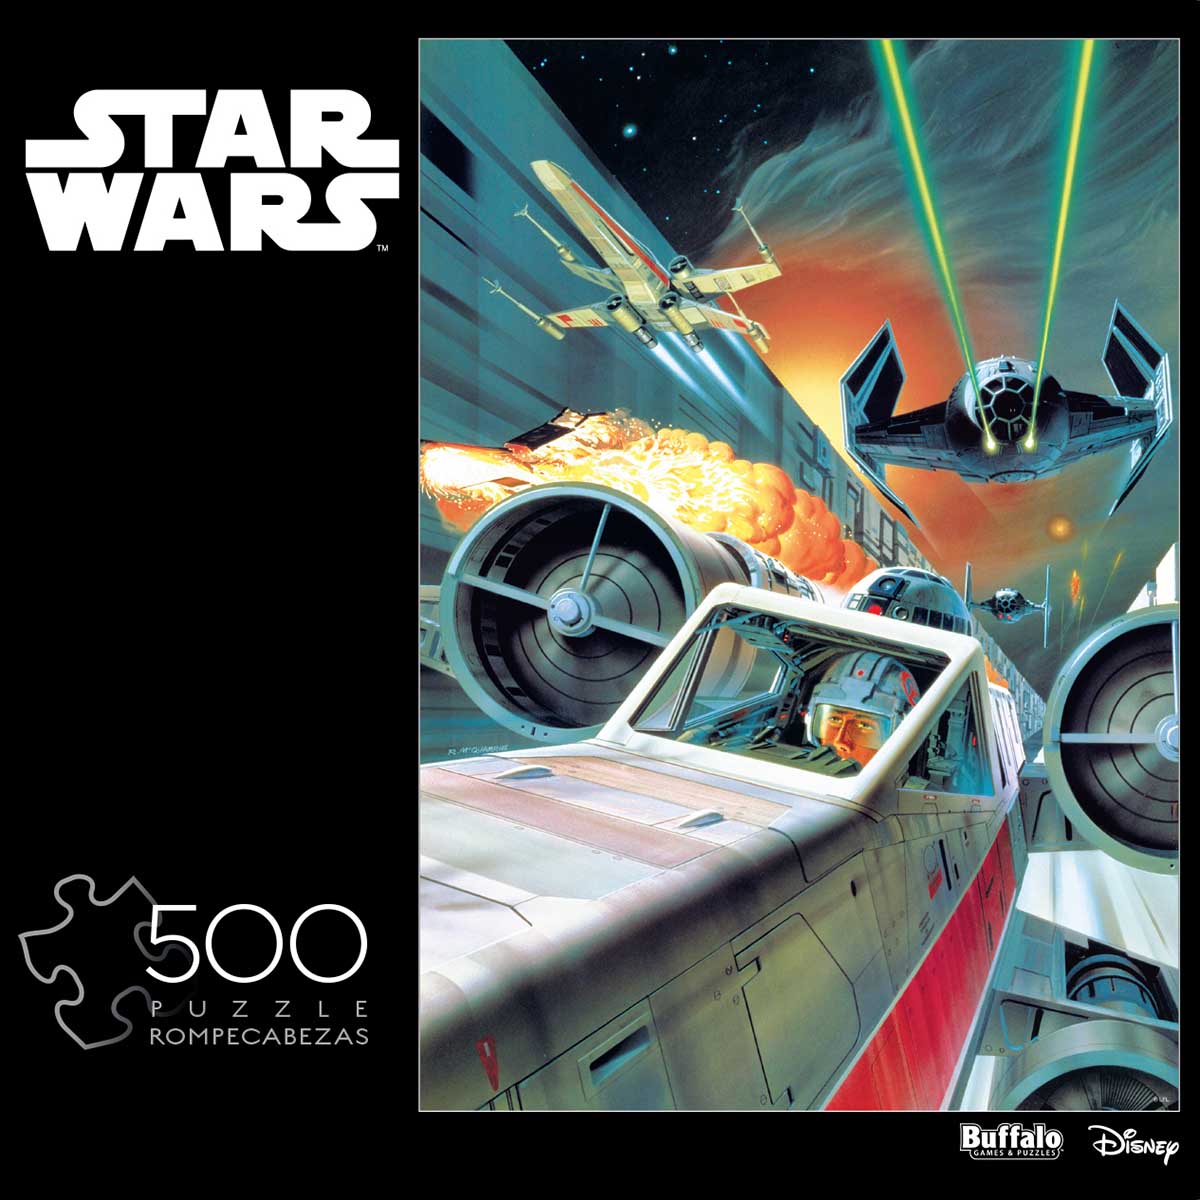 Star Wars - Use The Force, Luke